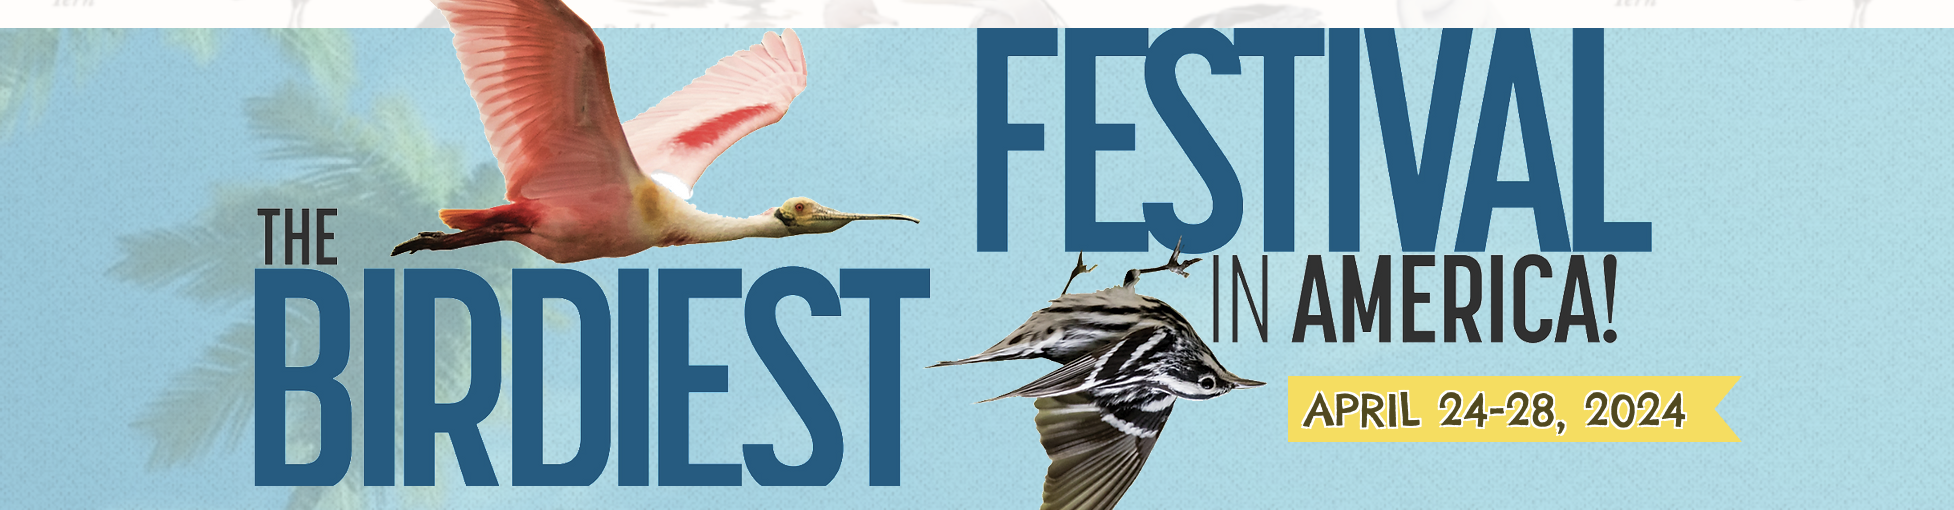 Birdiest Festival banner